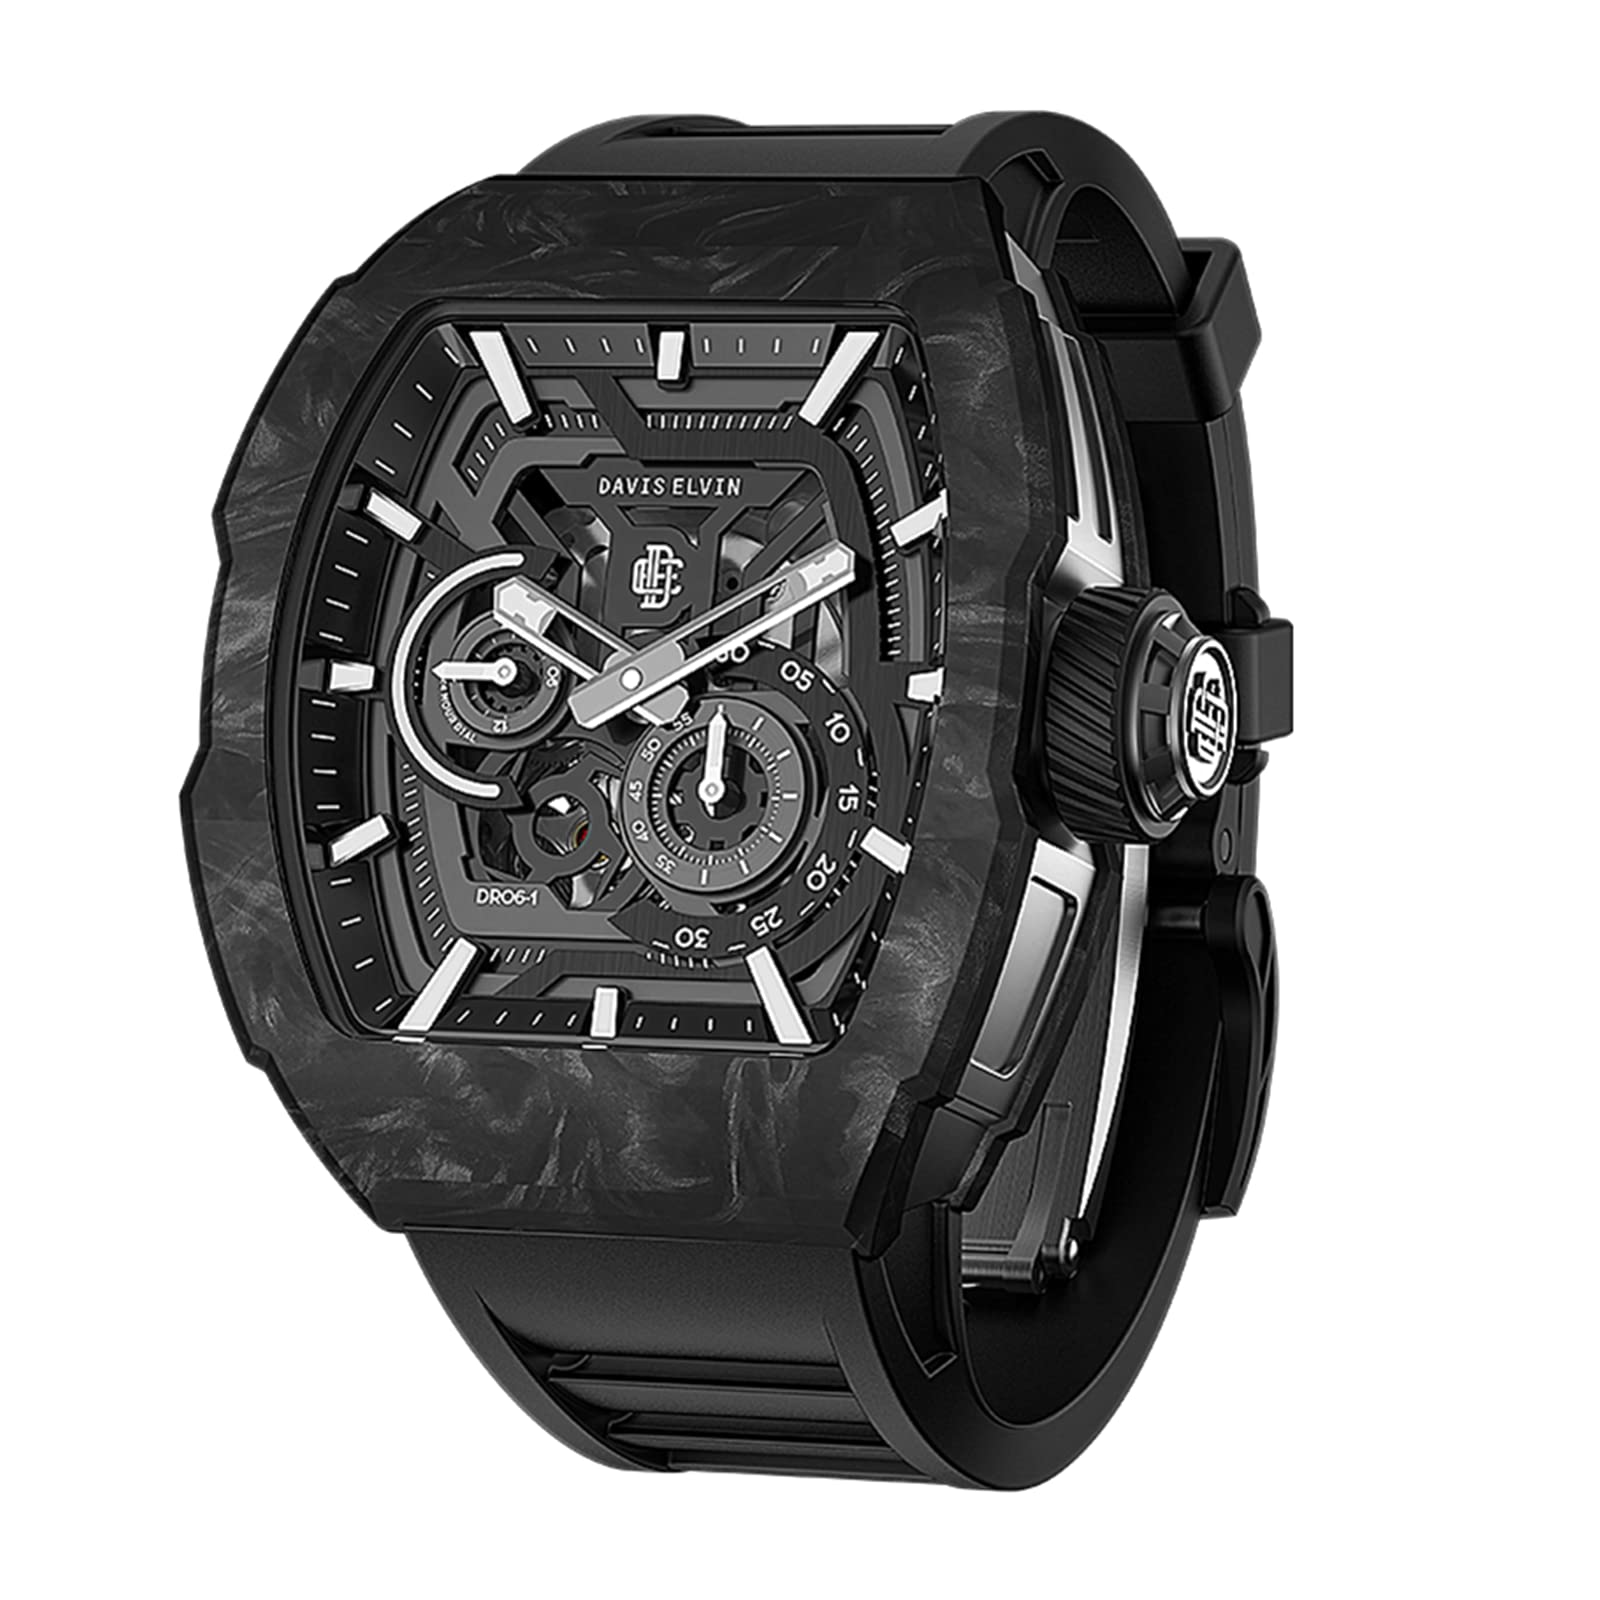 DAVIS ELVIN Tonneau Design Fashion Wrist Watch Carbon Fiber Automatic Movement Mechanical Watch Men's Wristwatch Birthday Gift Big Surprise for Men-DR06-1